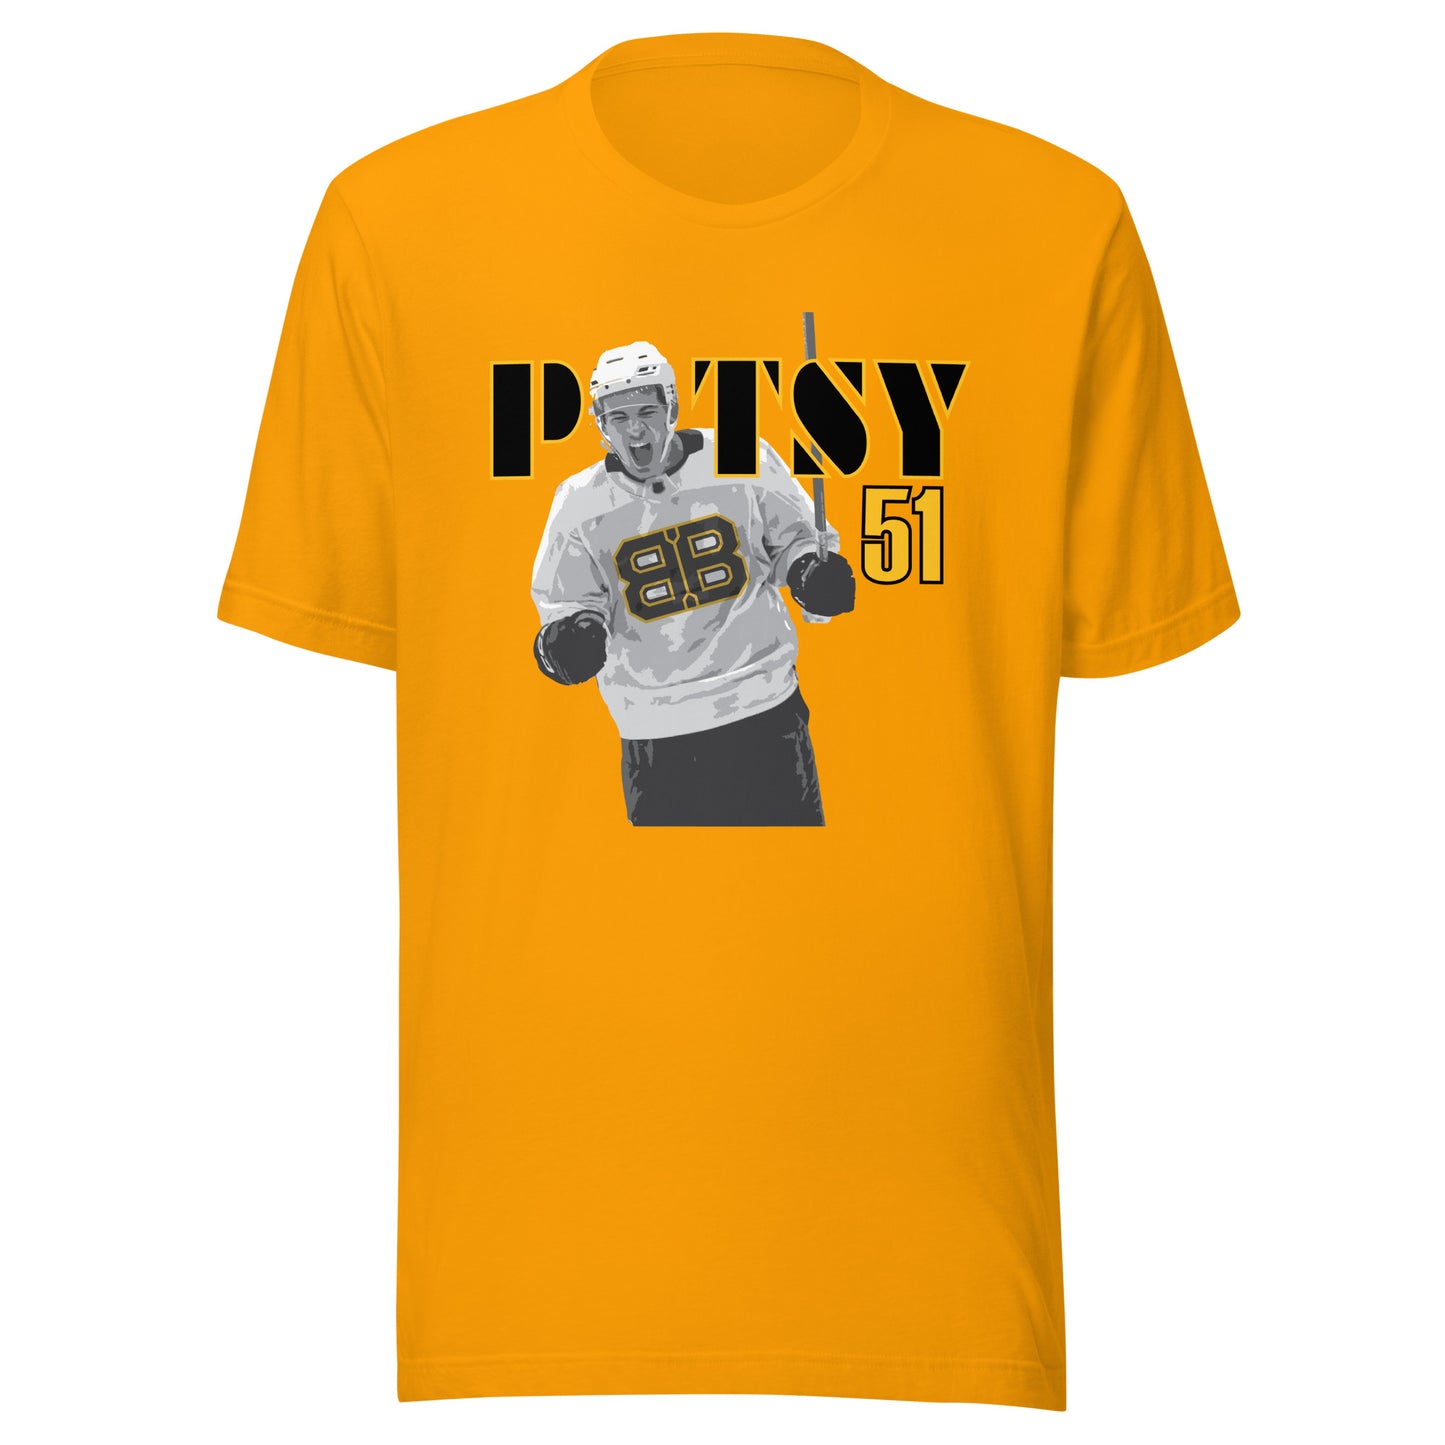 Bruins Benders Potsy T-shirt